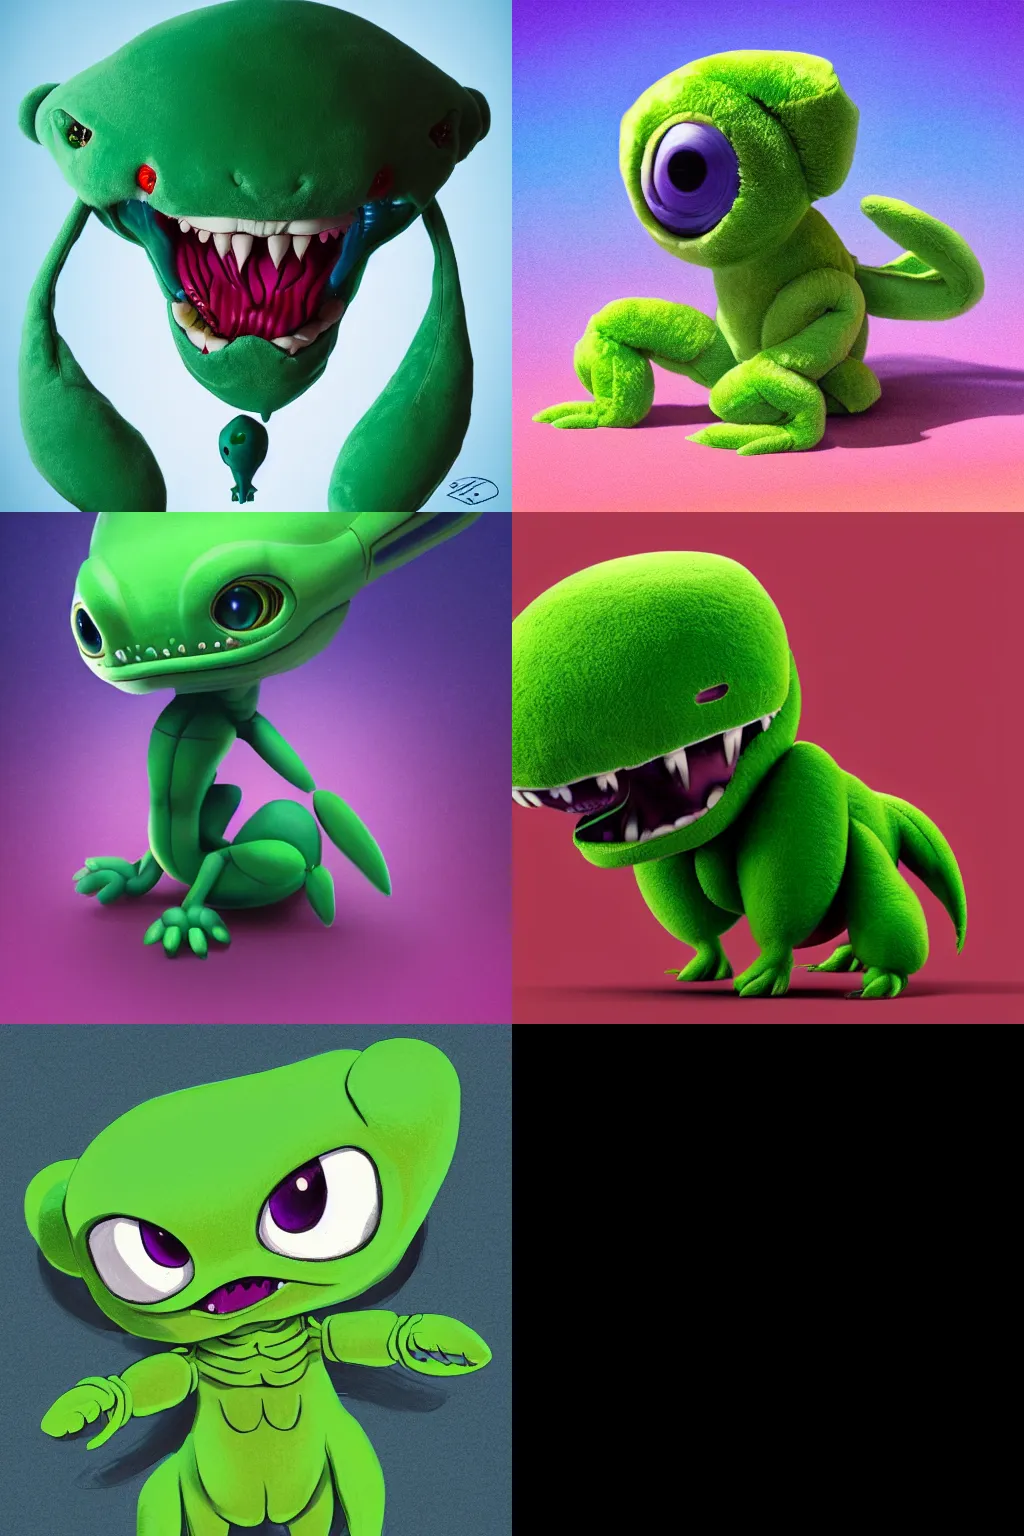 Prompt: a green plush toy that resembles an alien creature, stylized painting, expressive, cute, Disney, Capcom, SNK, Studio Trigger, Studio Ghibli, 4k, 8k